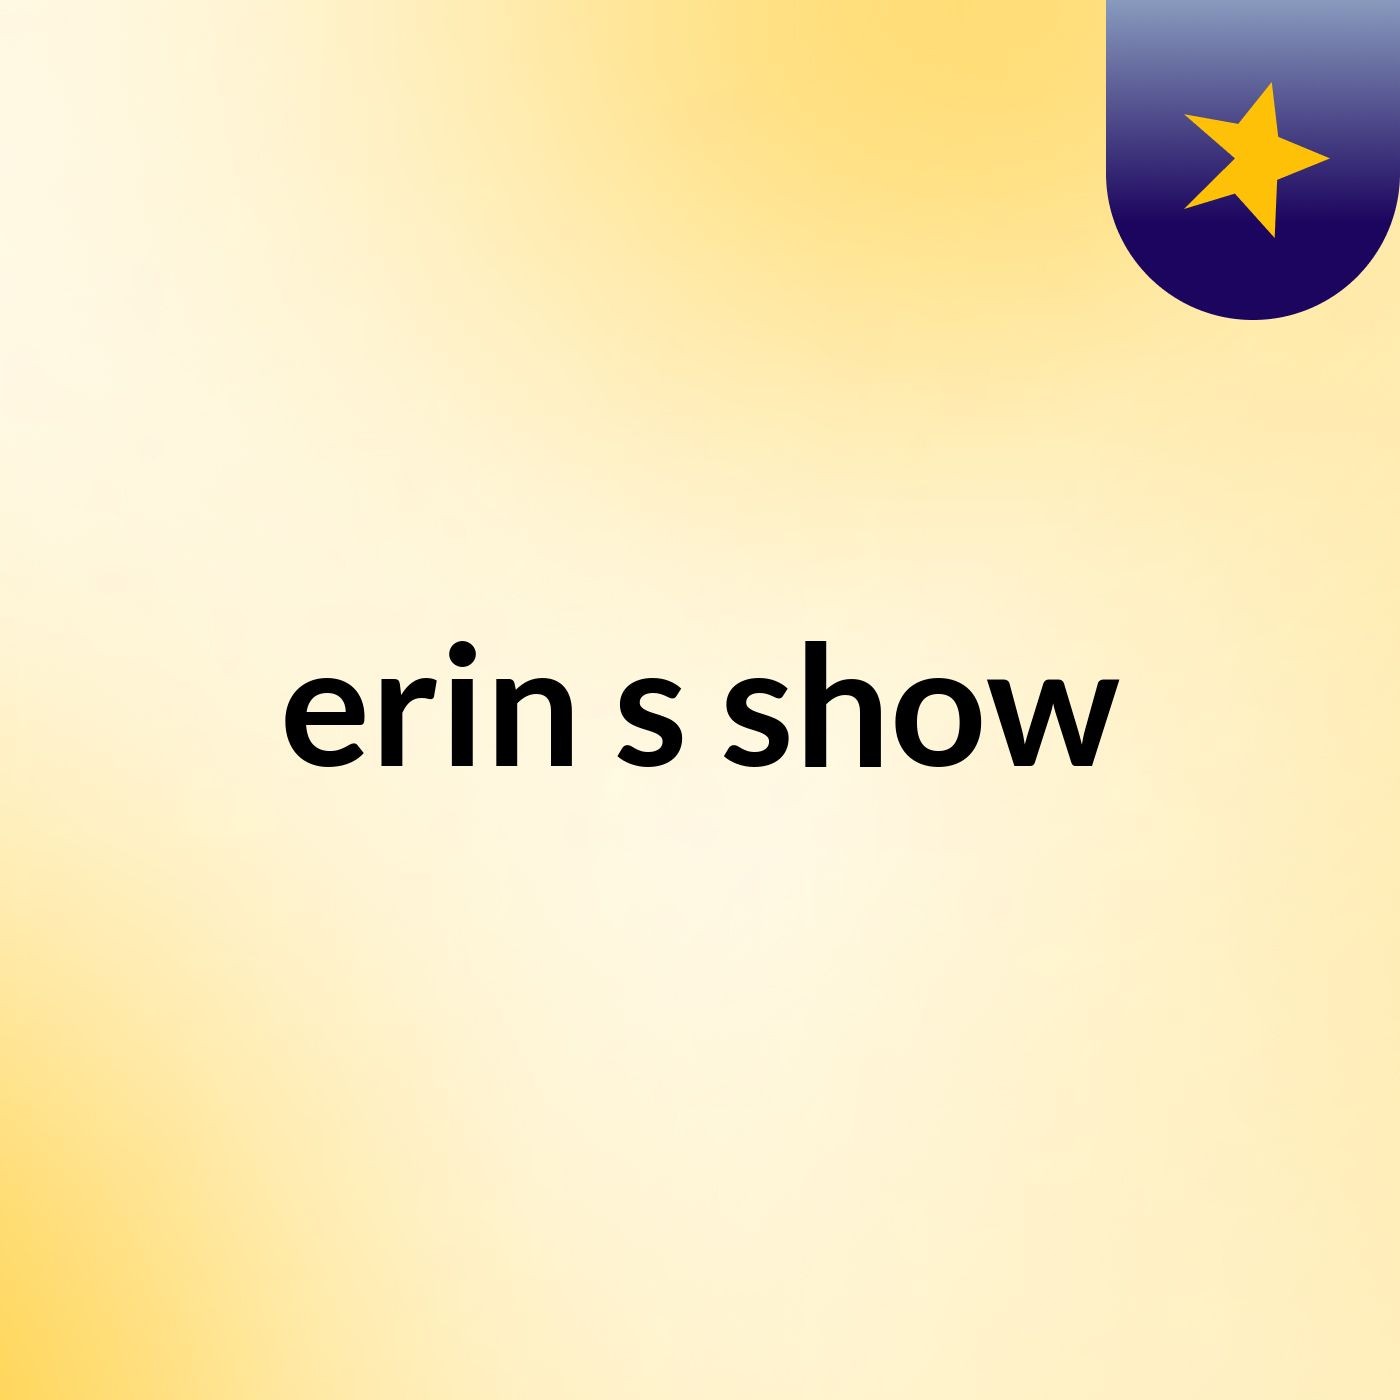 erin's show